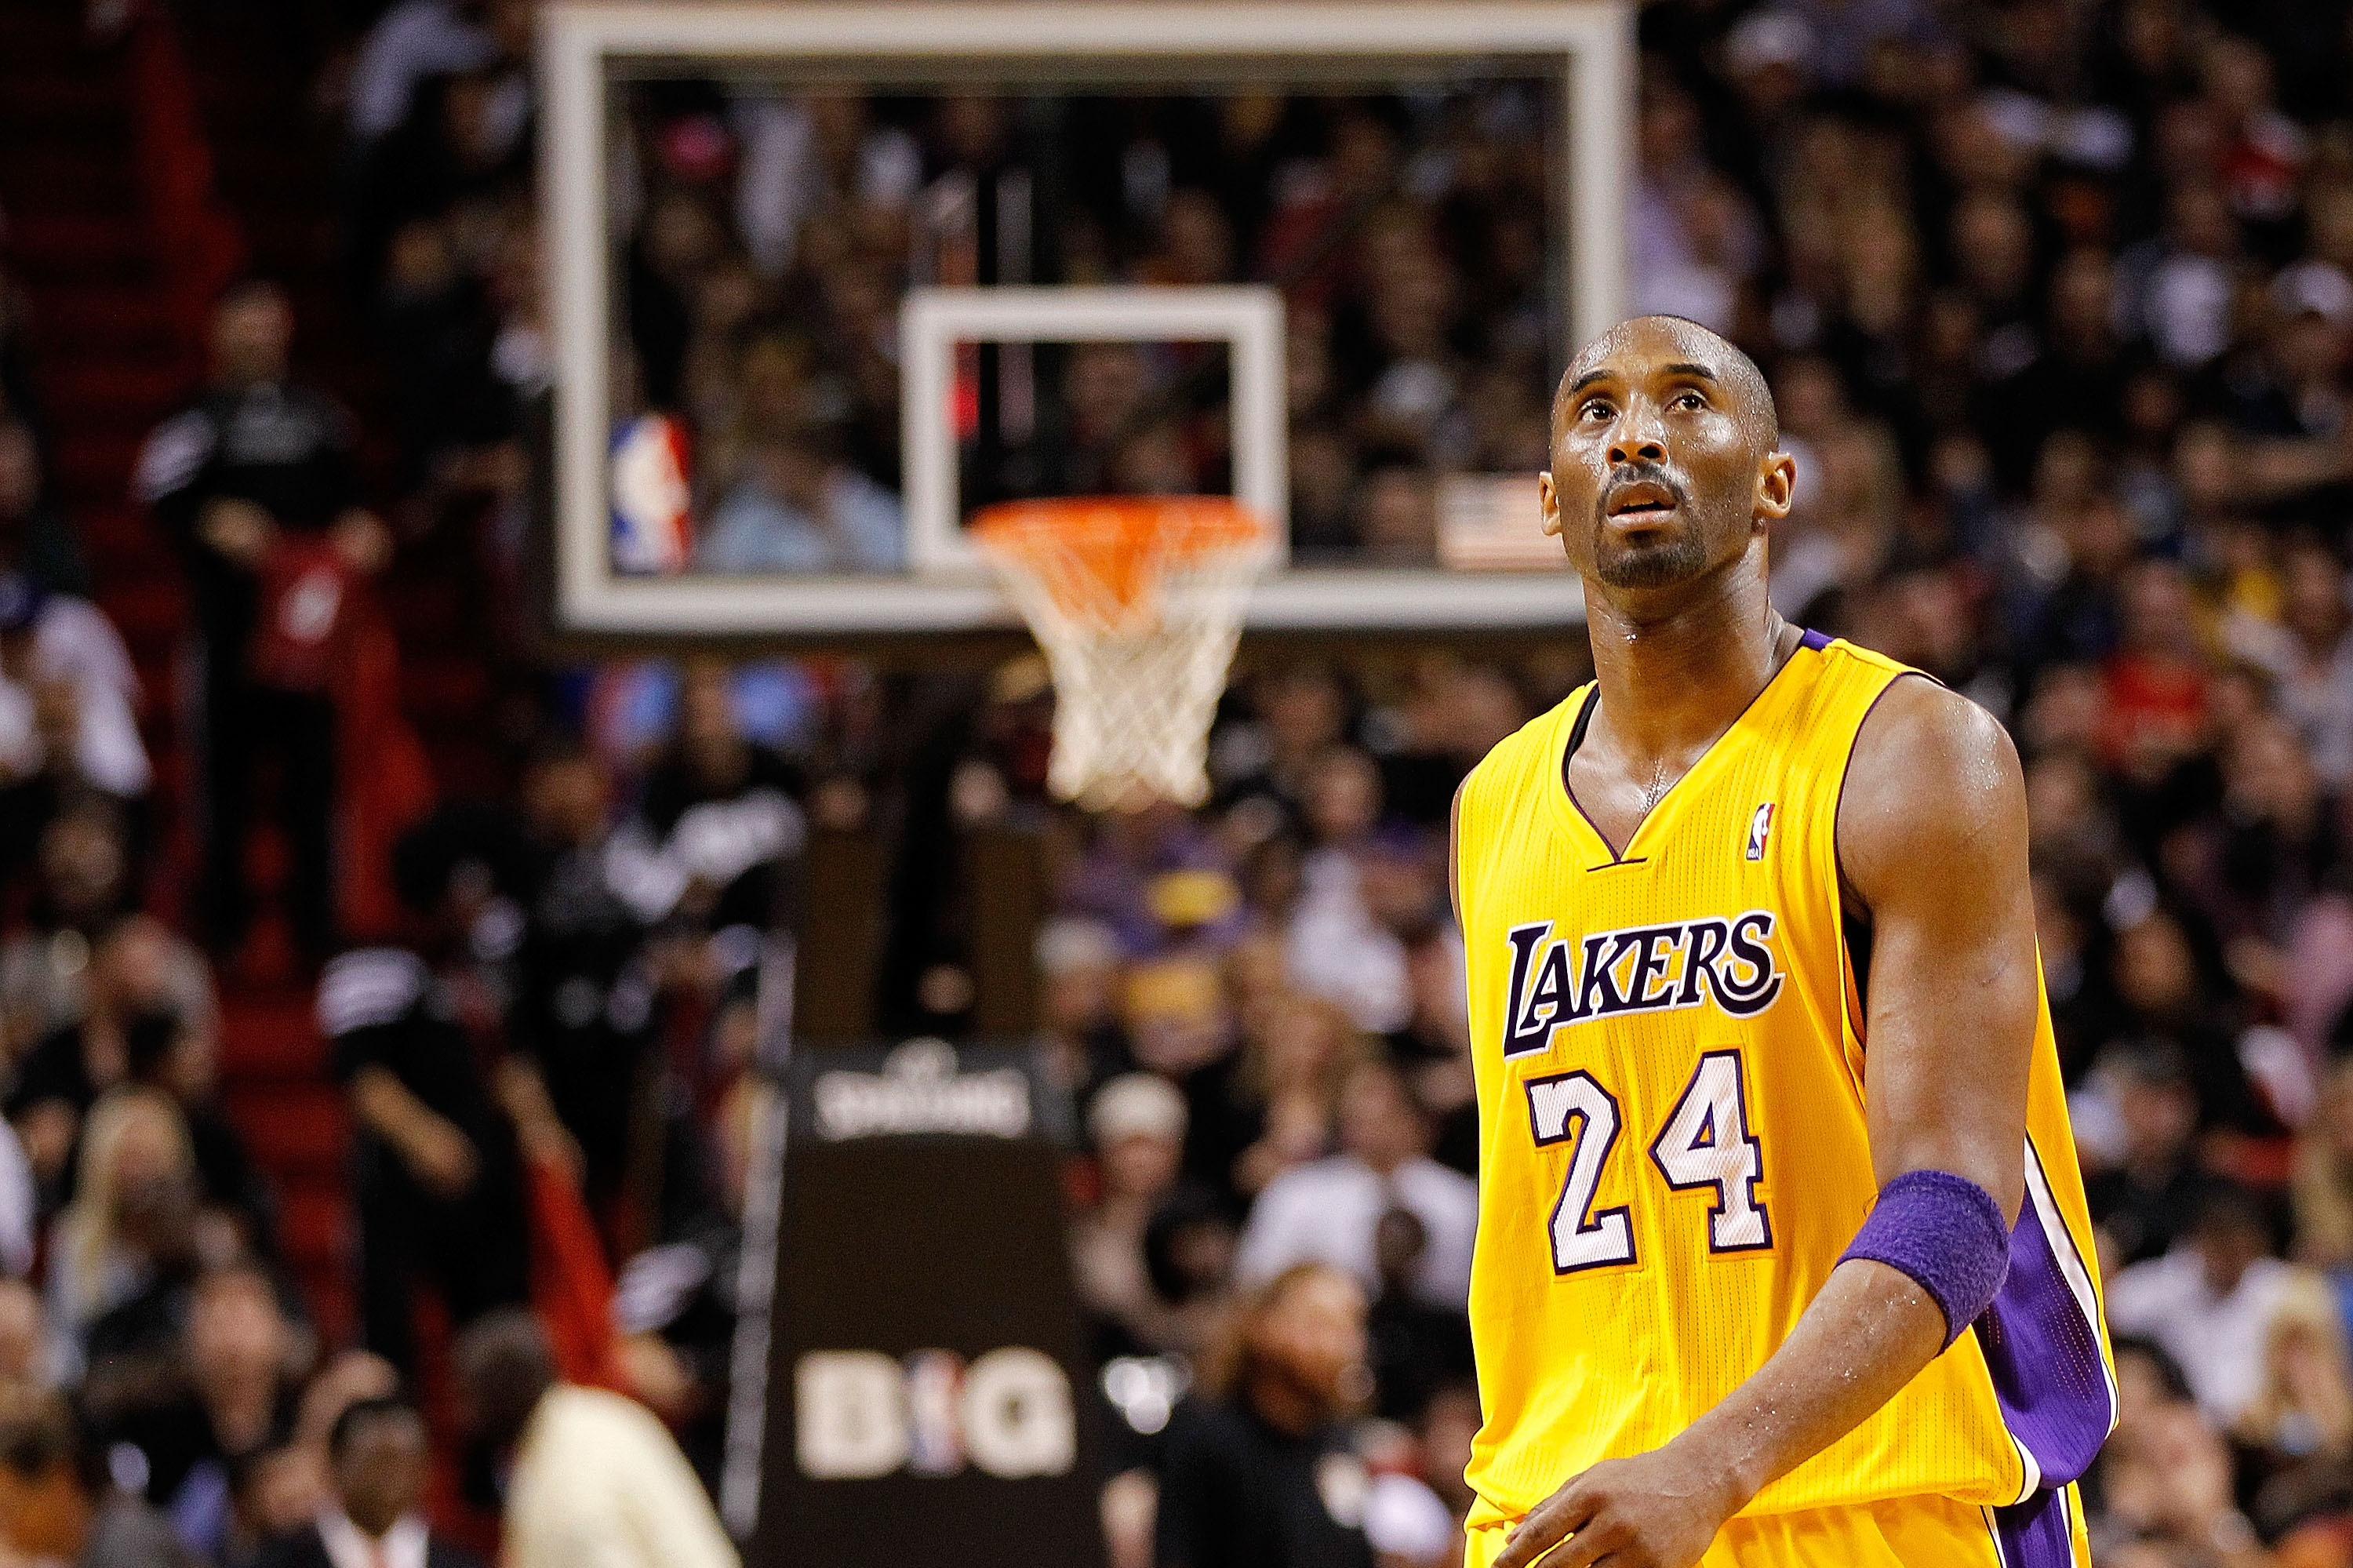 Kobe Bryant has Sold Most NBA Jerseys (again) during 2009-10 Season